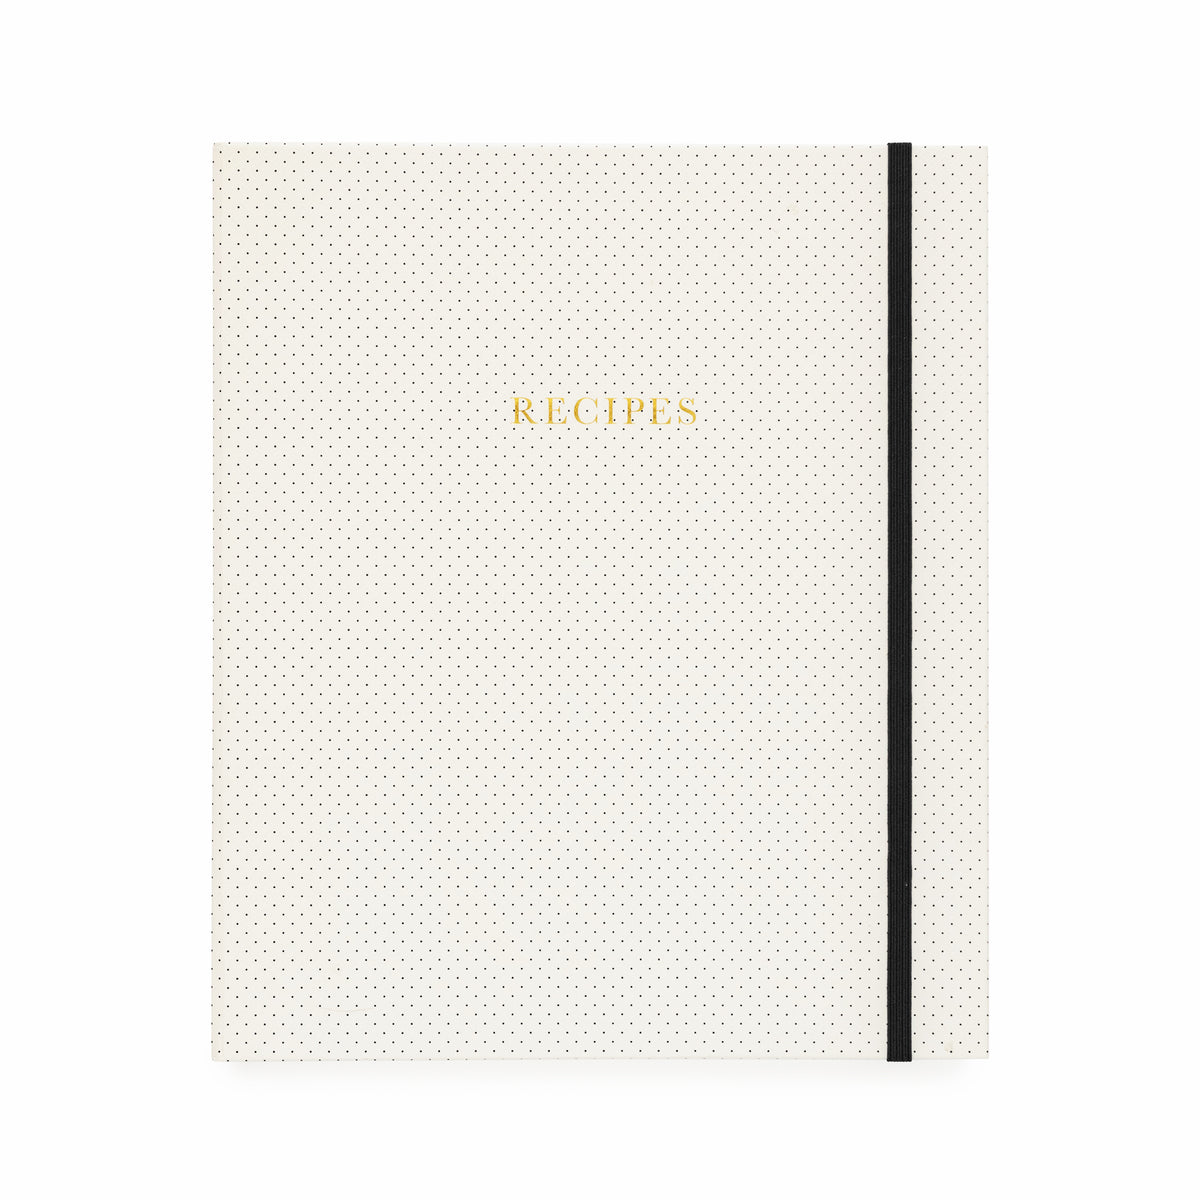 the recipe book